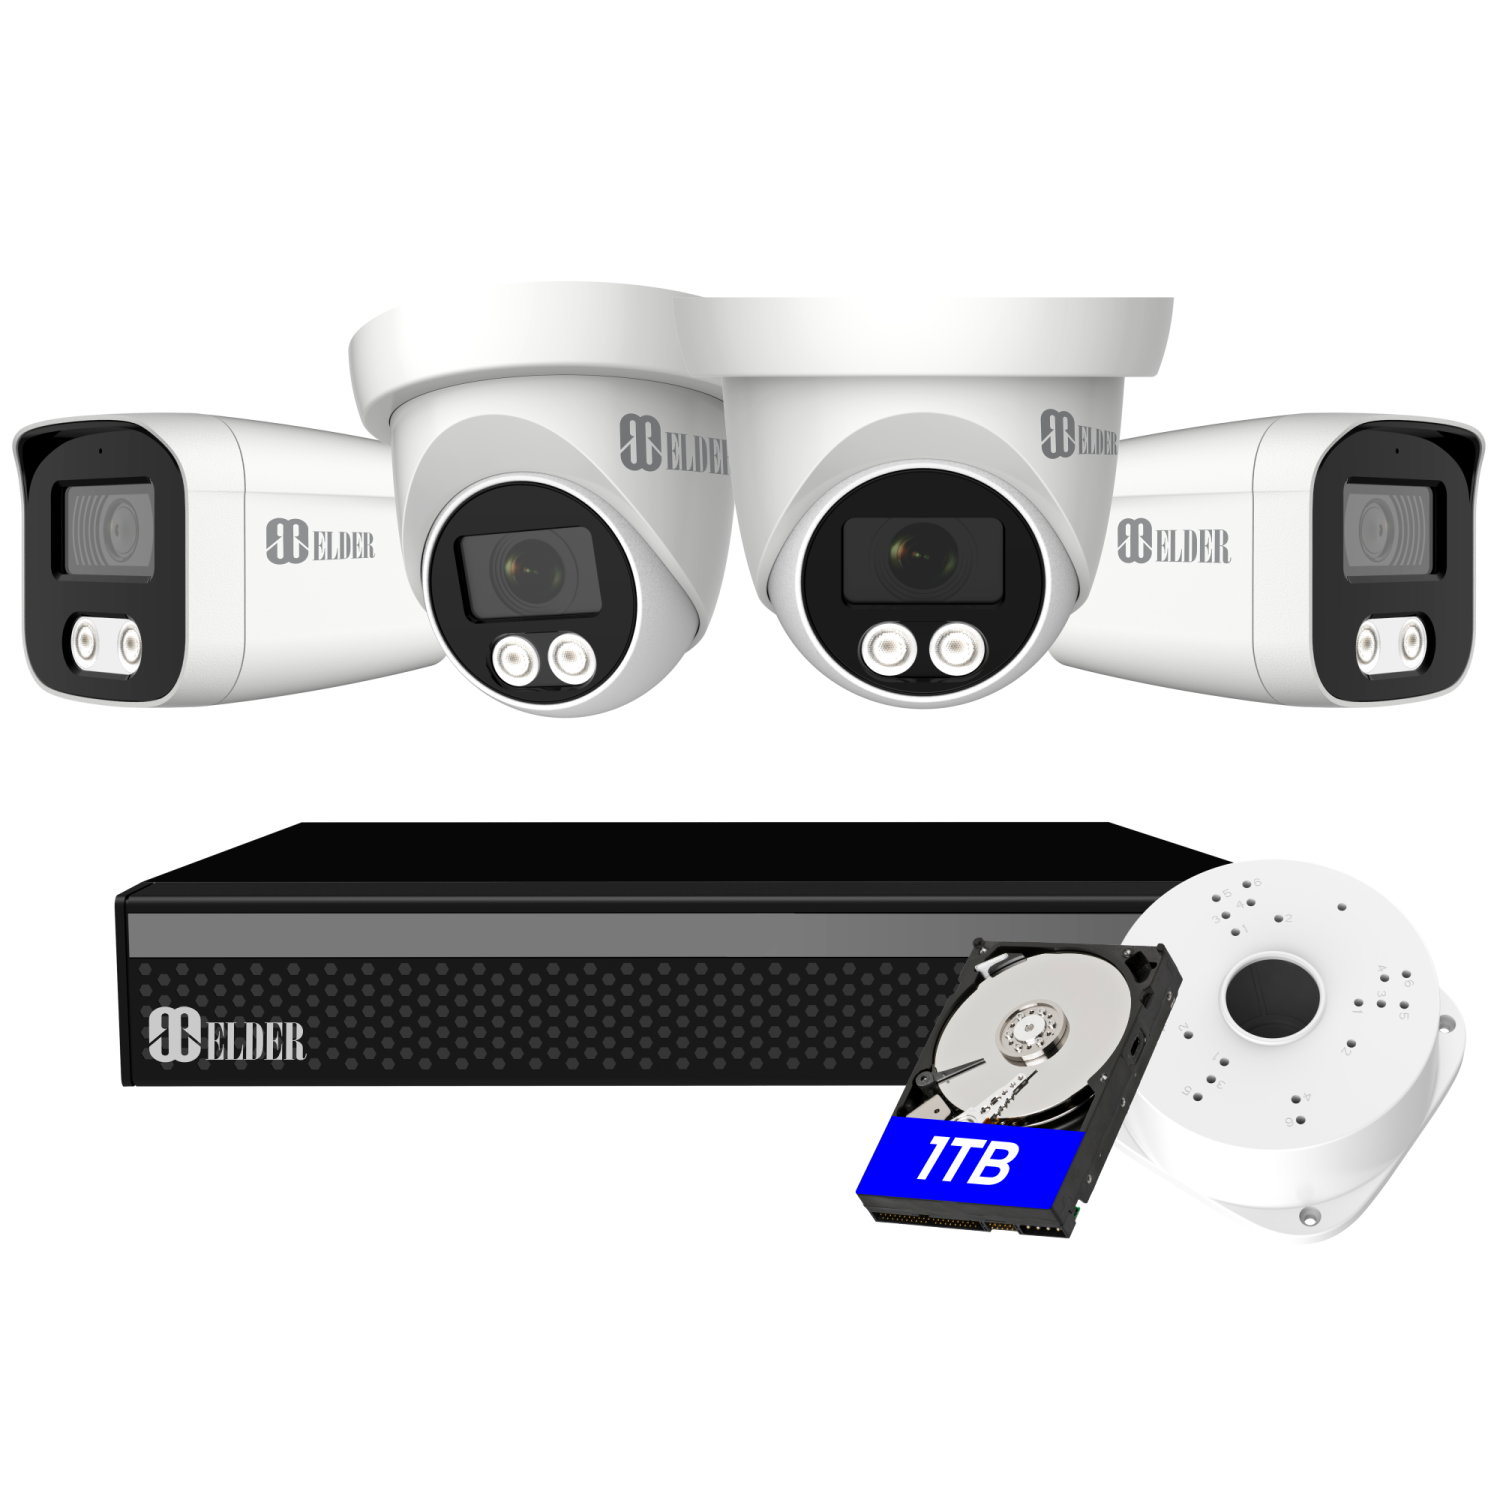 【2023 New】Elder 4K Security Camera System Spotlight, 4-Camera DVR Surveillance Kit Outdoor DIY Wired 1TB Audio Color Night Vision, Home Security Camera System